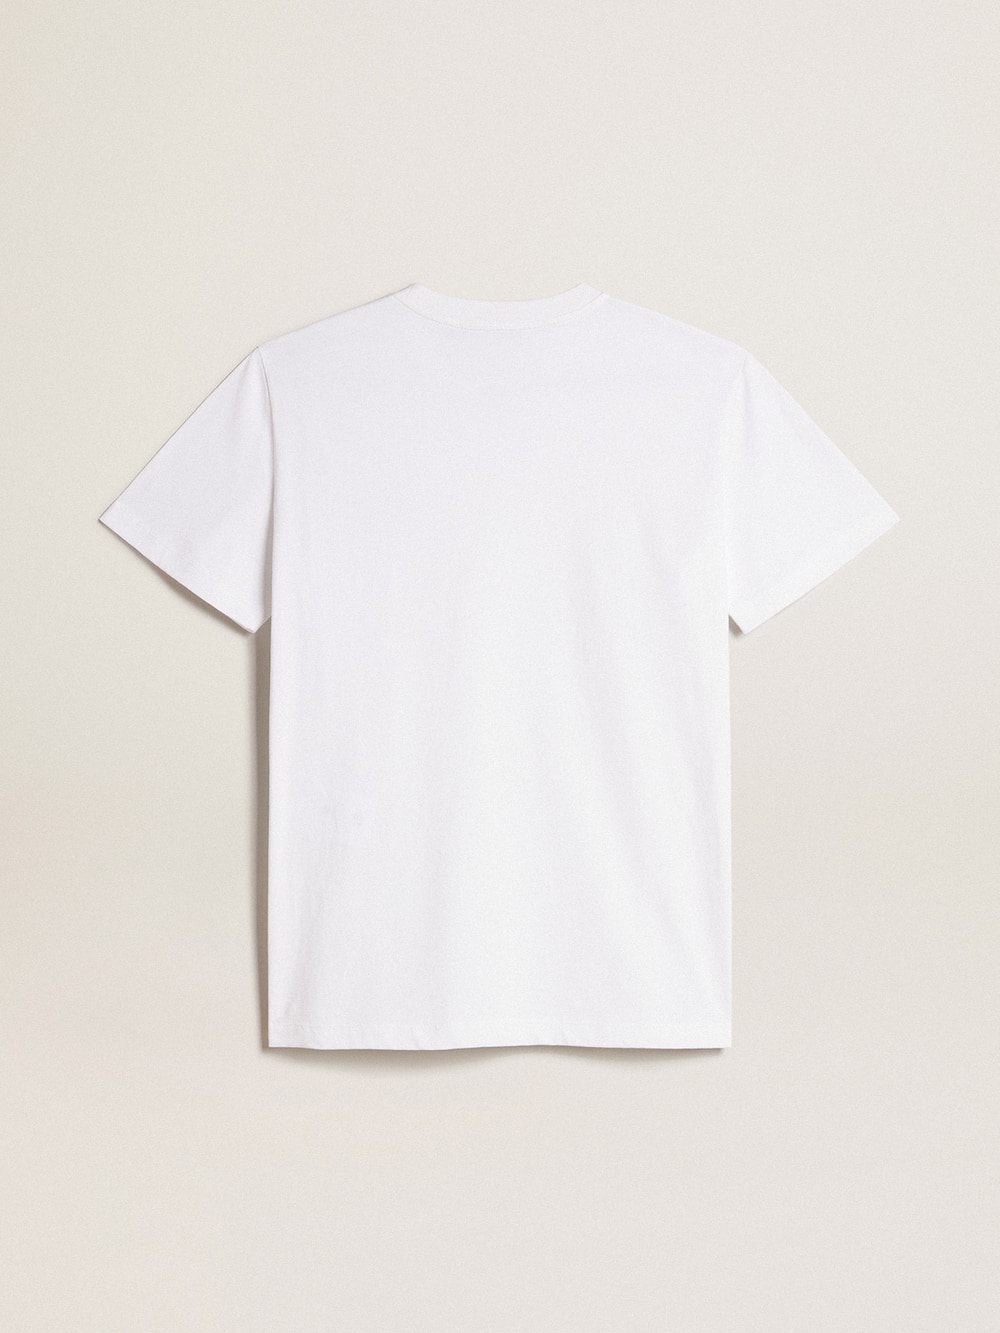 Golden Goose - Camiseta branca feminina com estrela bordô na frente in 